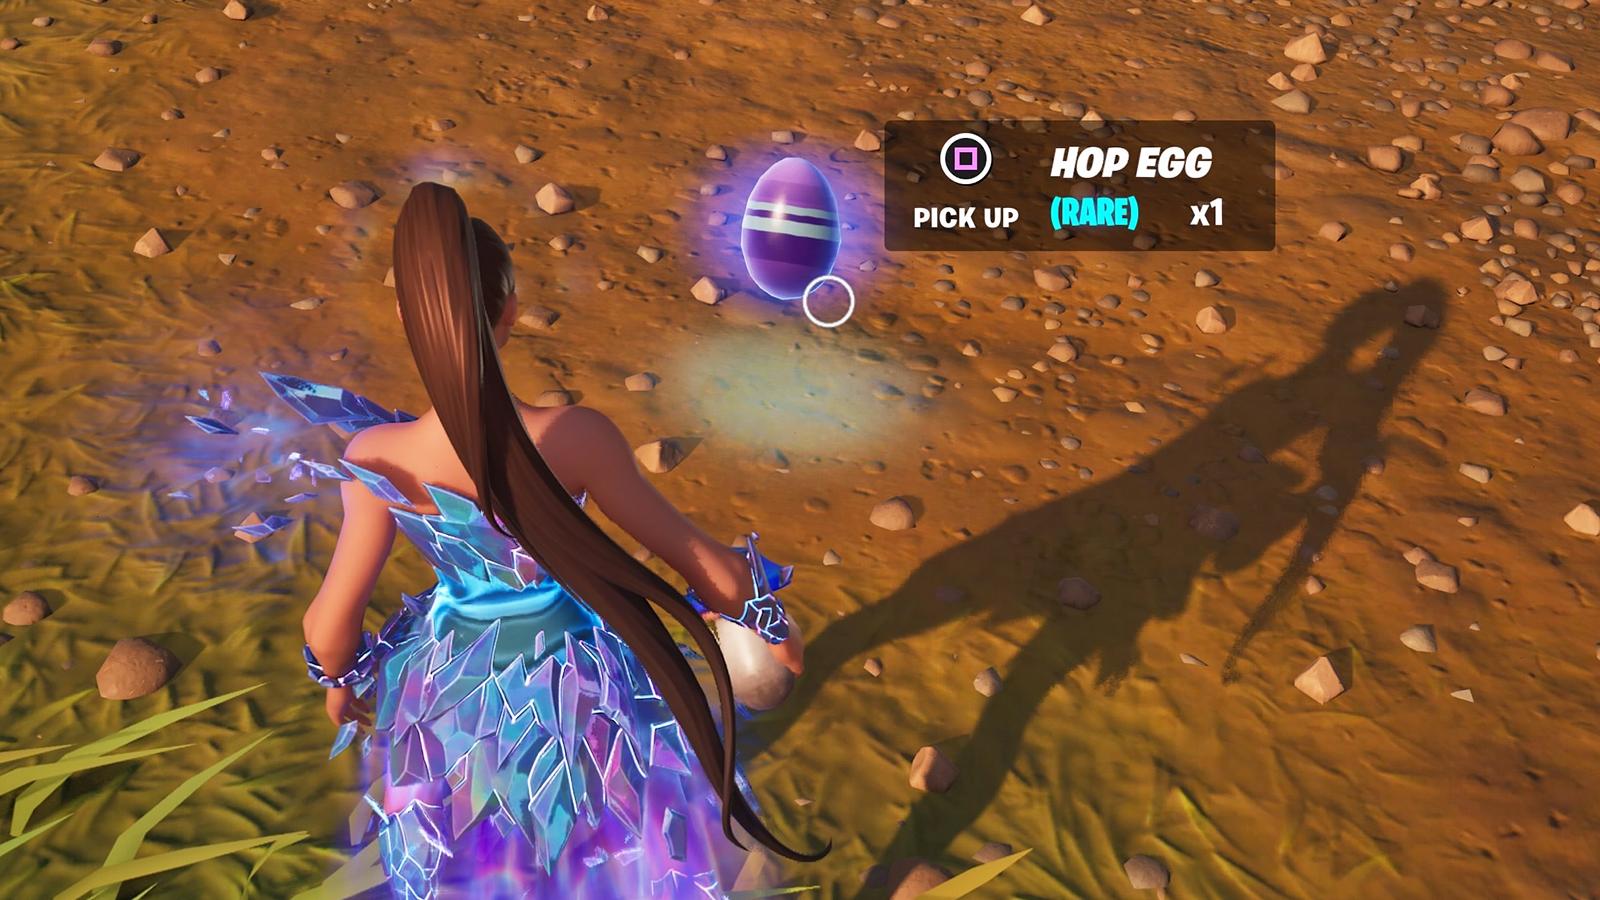 A Hop Egg in Fortnite